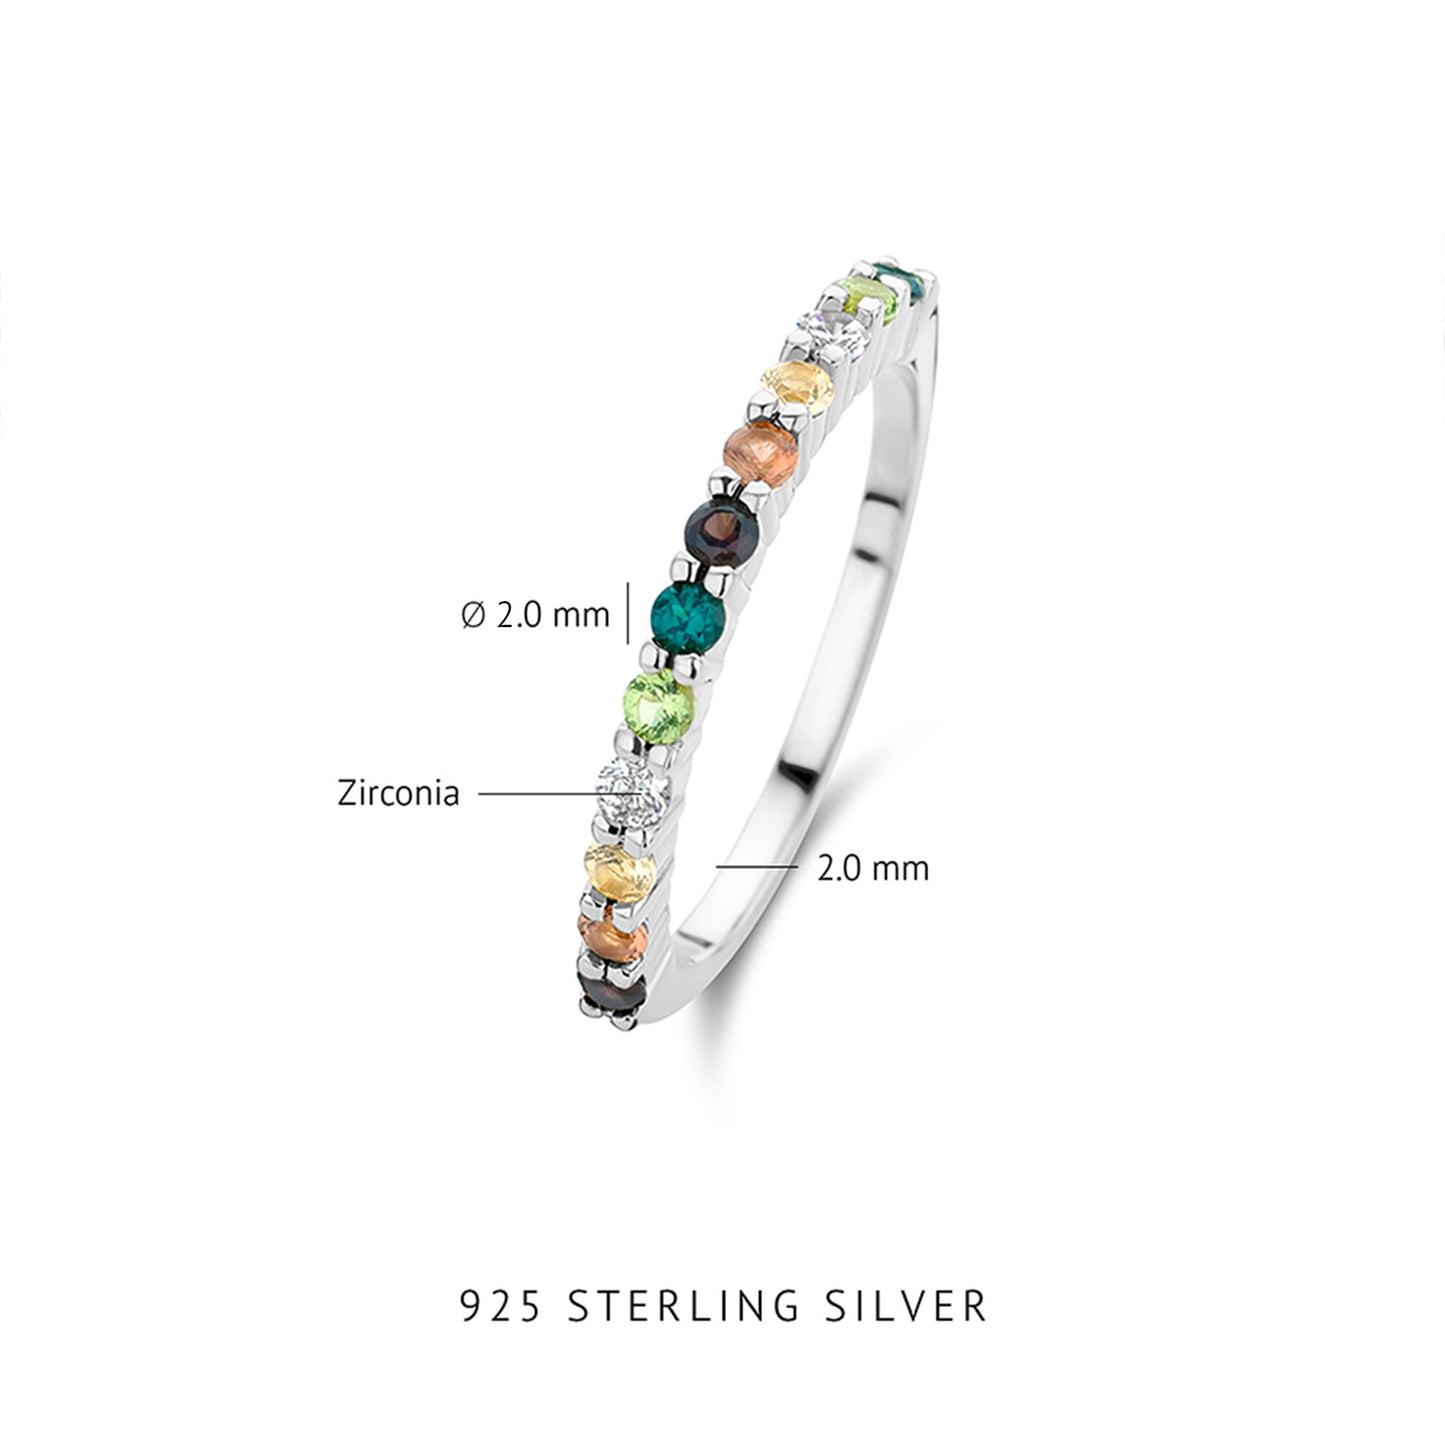 Santa Maria del Fiore 925 sterling silver ring with coloured zirconia stones